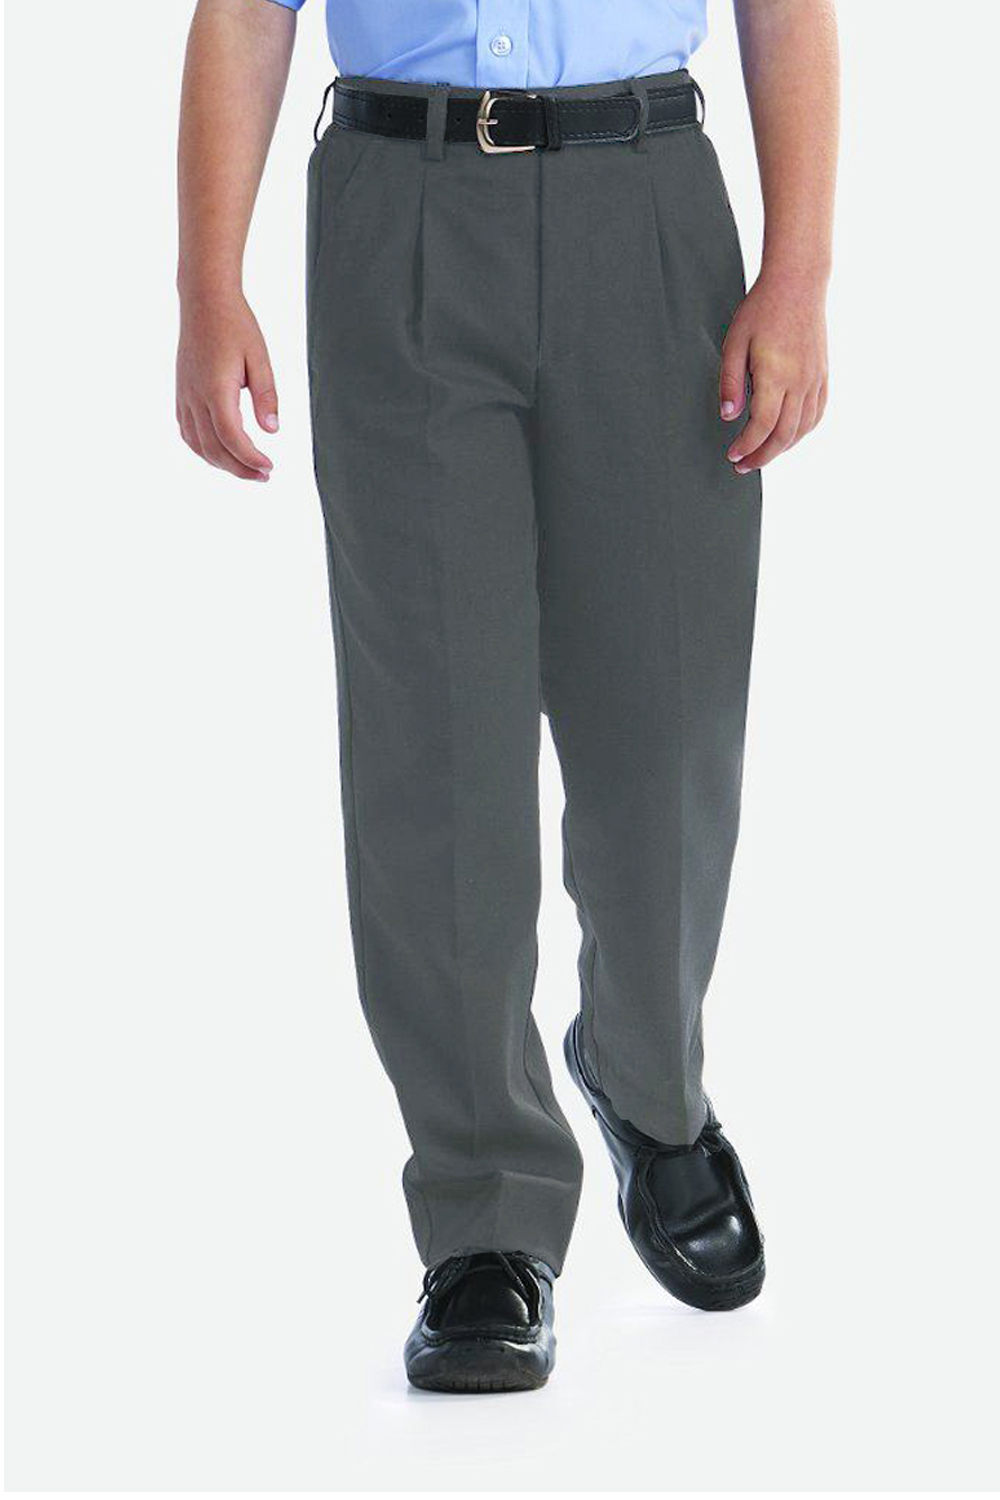 Senior Boys Grey Trousers - 24W/24L